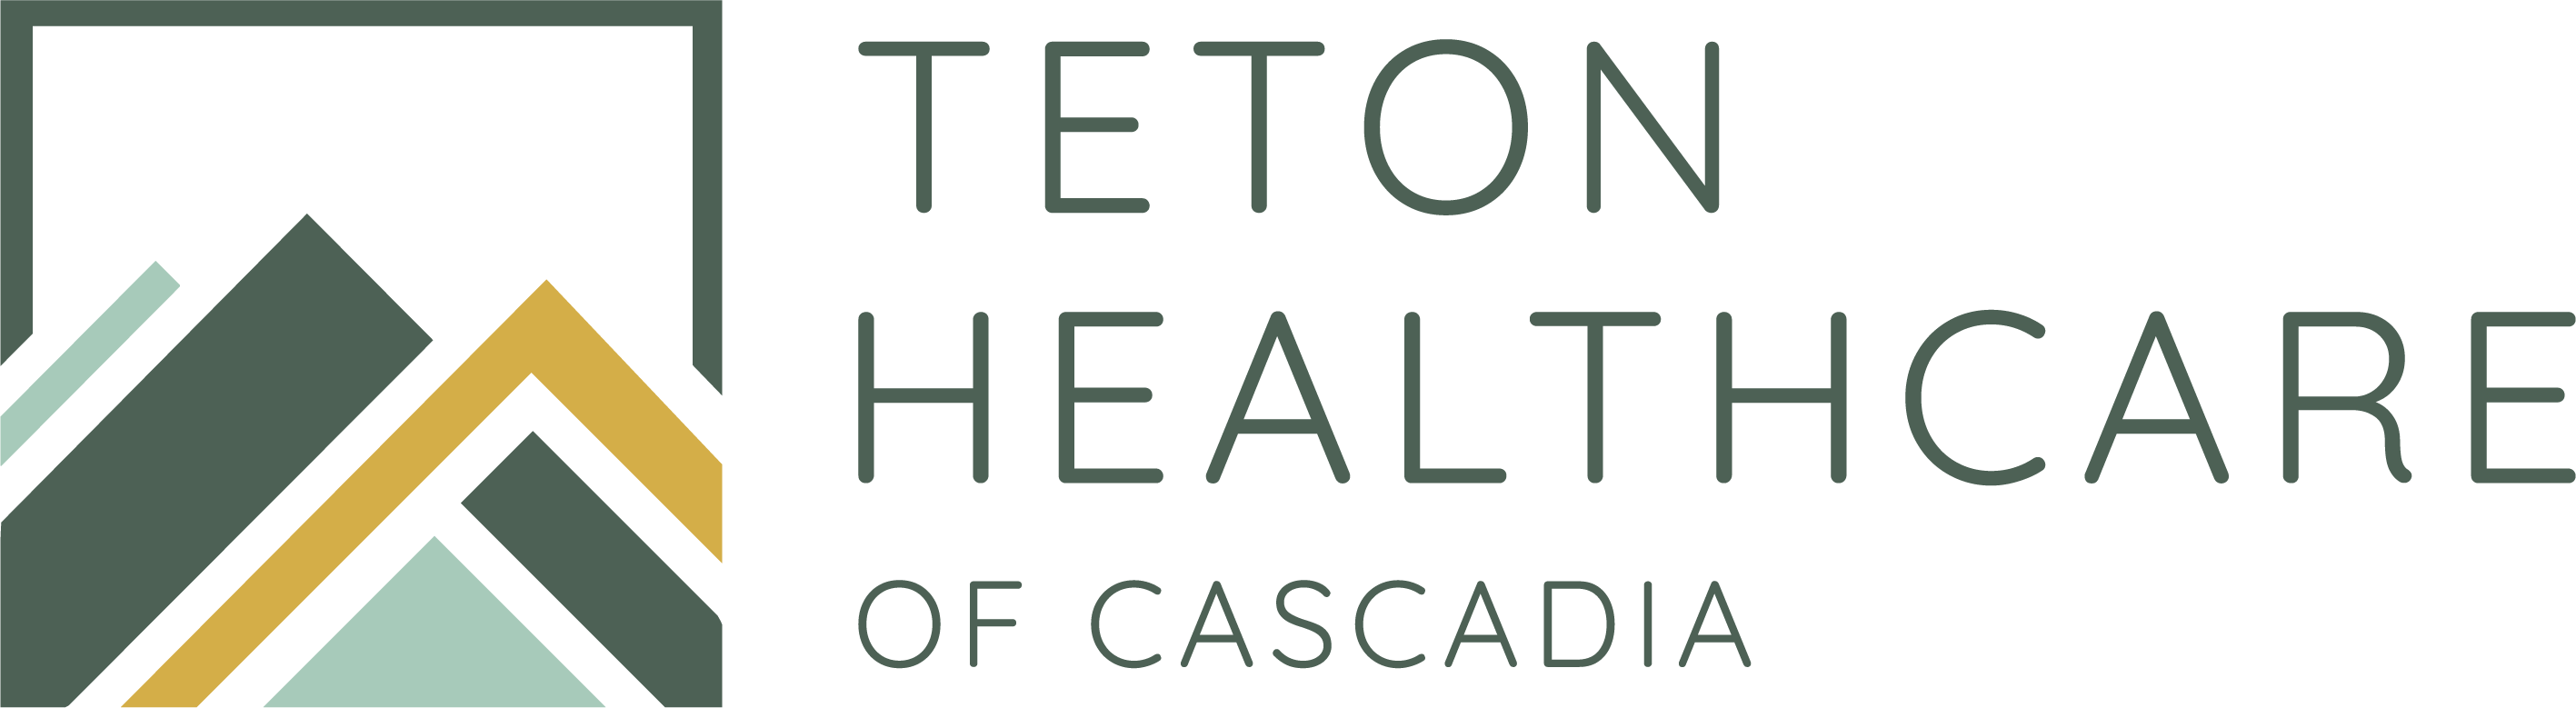 Teton Healthcare of Cascadia